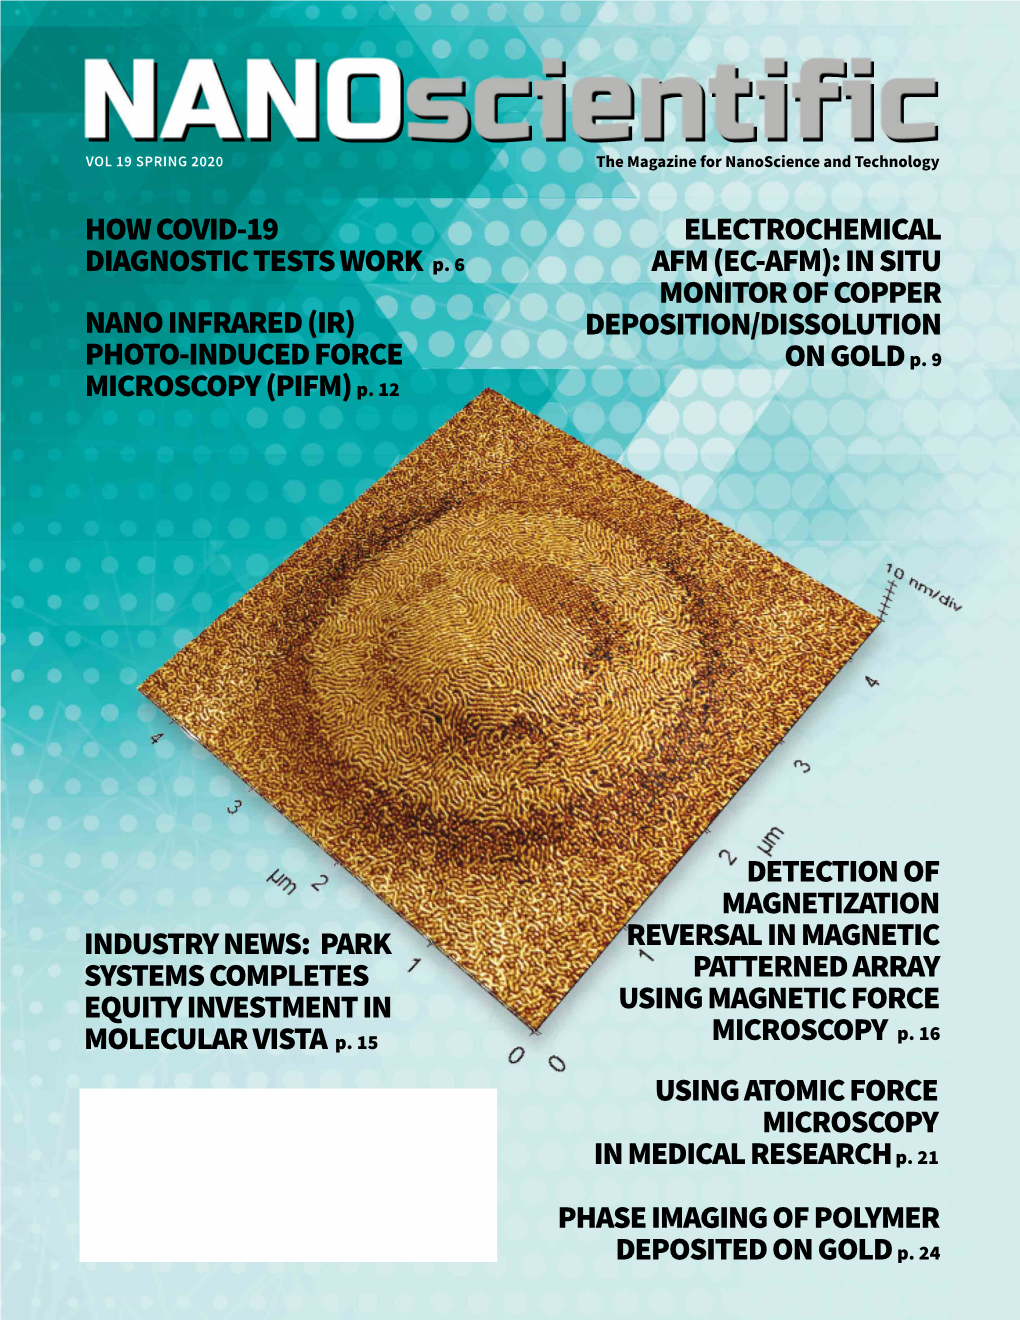 Nanoscientificvol 19 SPRING 2020 the Magazine for Nanoscience and Technology